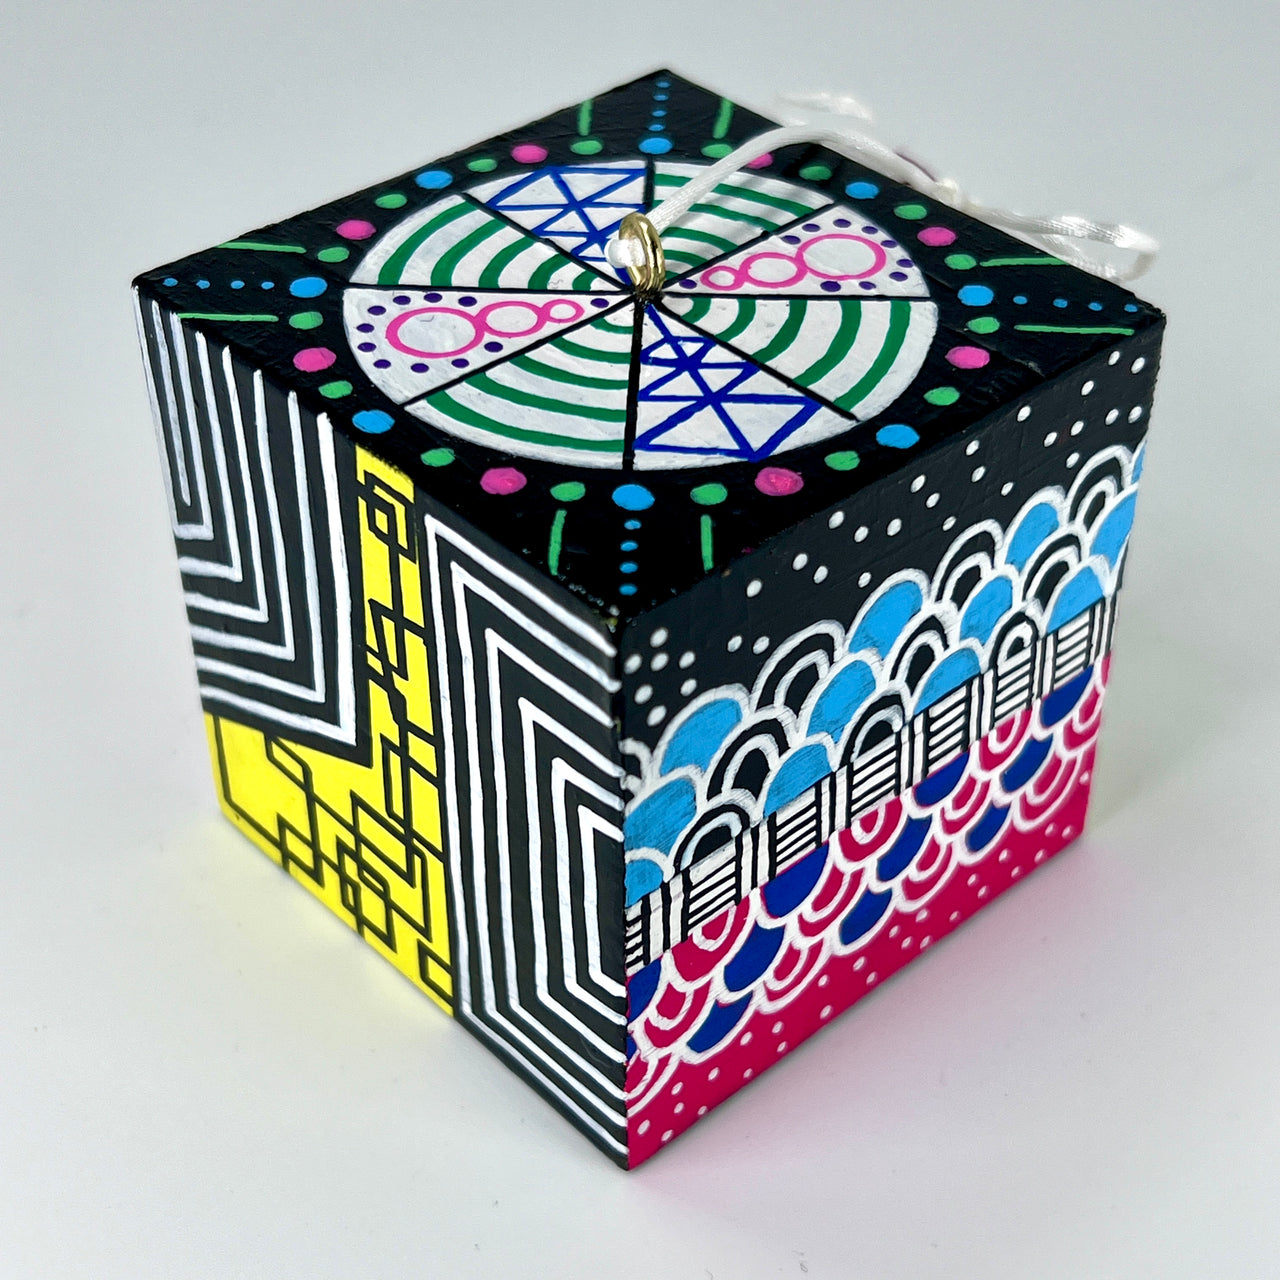 #20 - 3D Cube Art - 2.25" cube